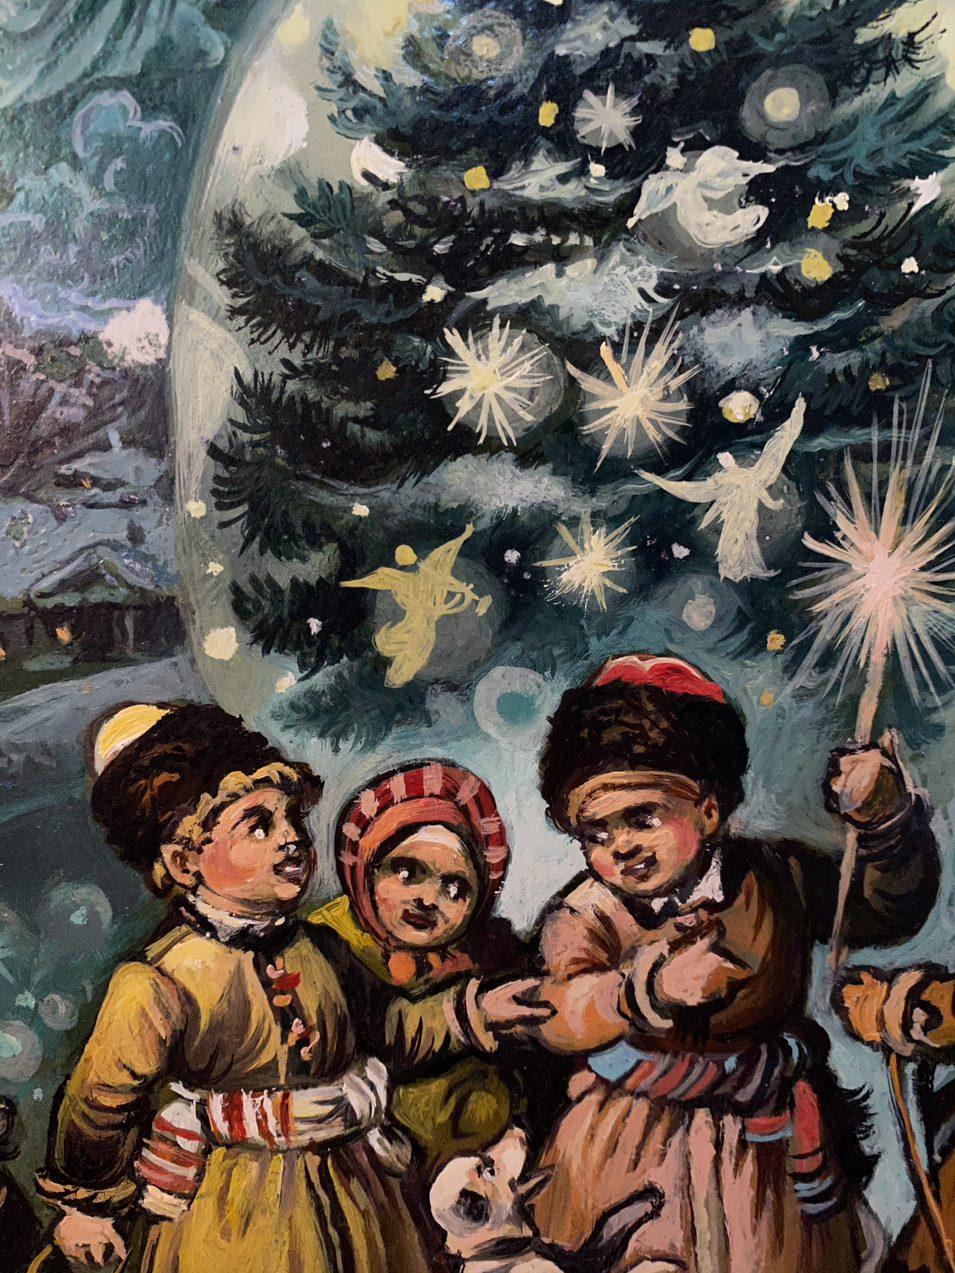 Artist: Alexander Litvinov
Work: Original oil painting, handmade artwork, one of a kind 
Medium: Oil on Cardboard
Style: Classic Figurative
Year: 2006
Title: Christmas
Size: 10